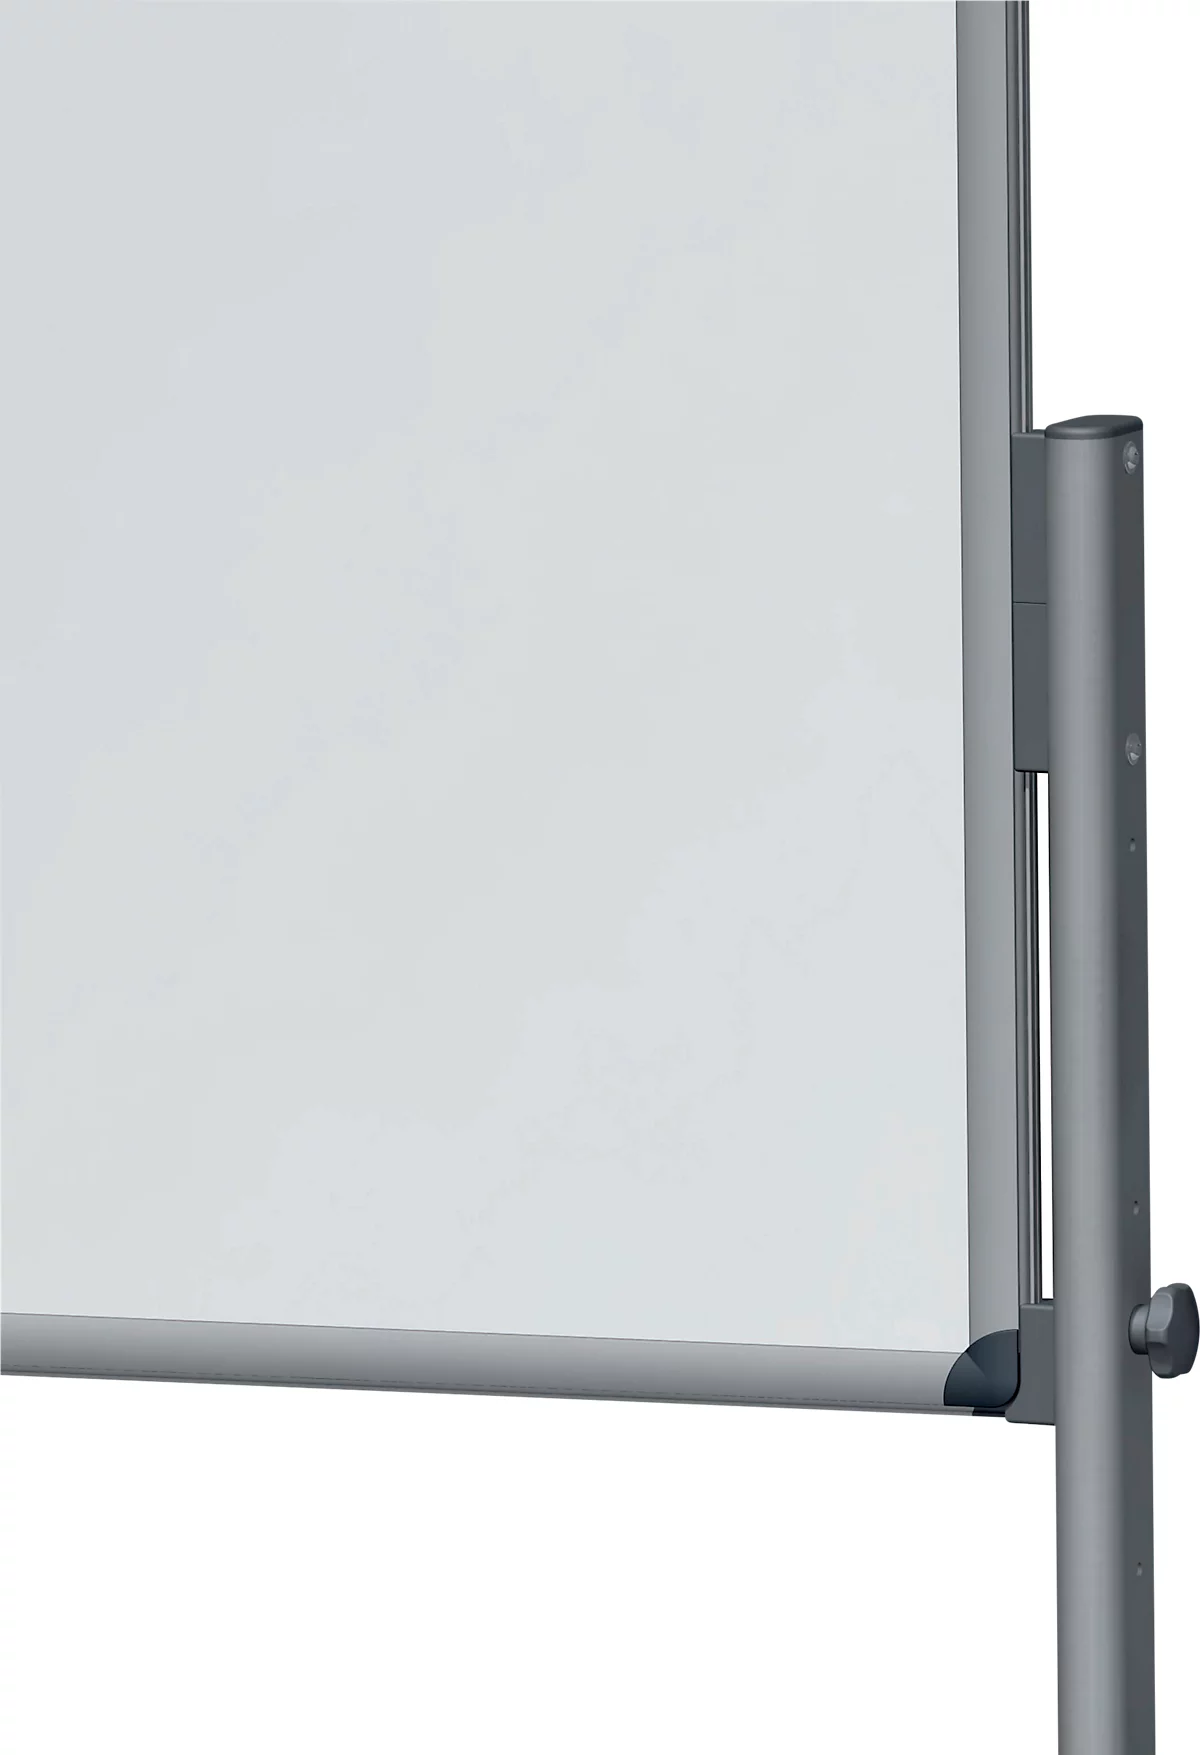 Mobiles Stativ Pro Line Tafelsystem STM815, fahrbar, feststellbar, höhen- und breitenverstellbar, 1150 - 1550 mm